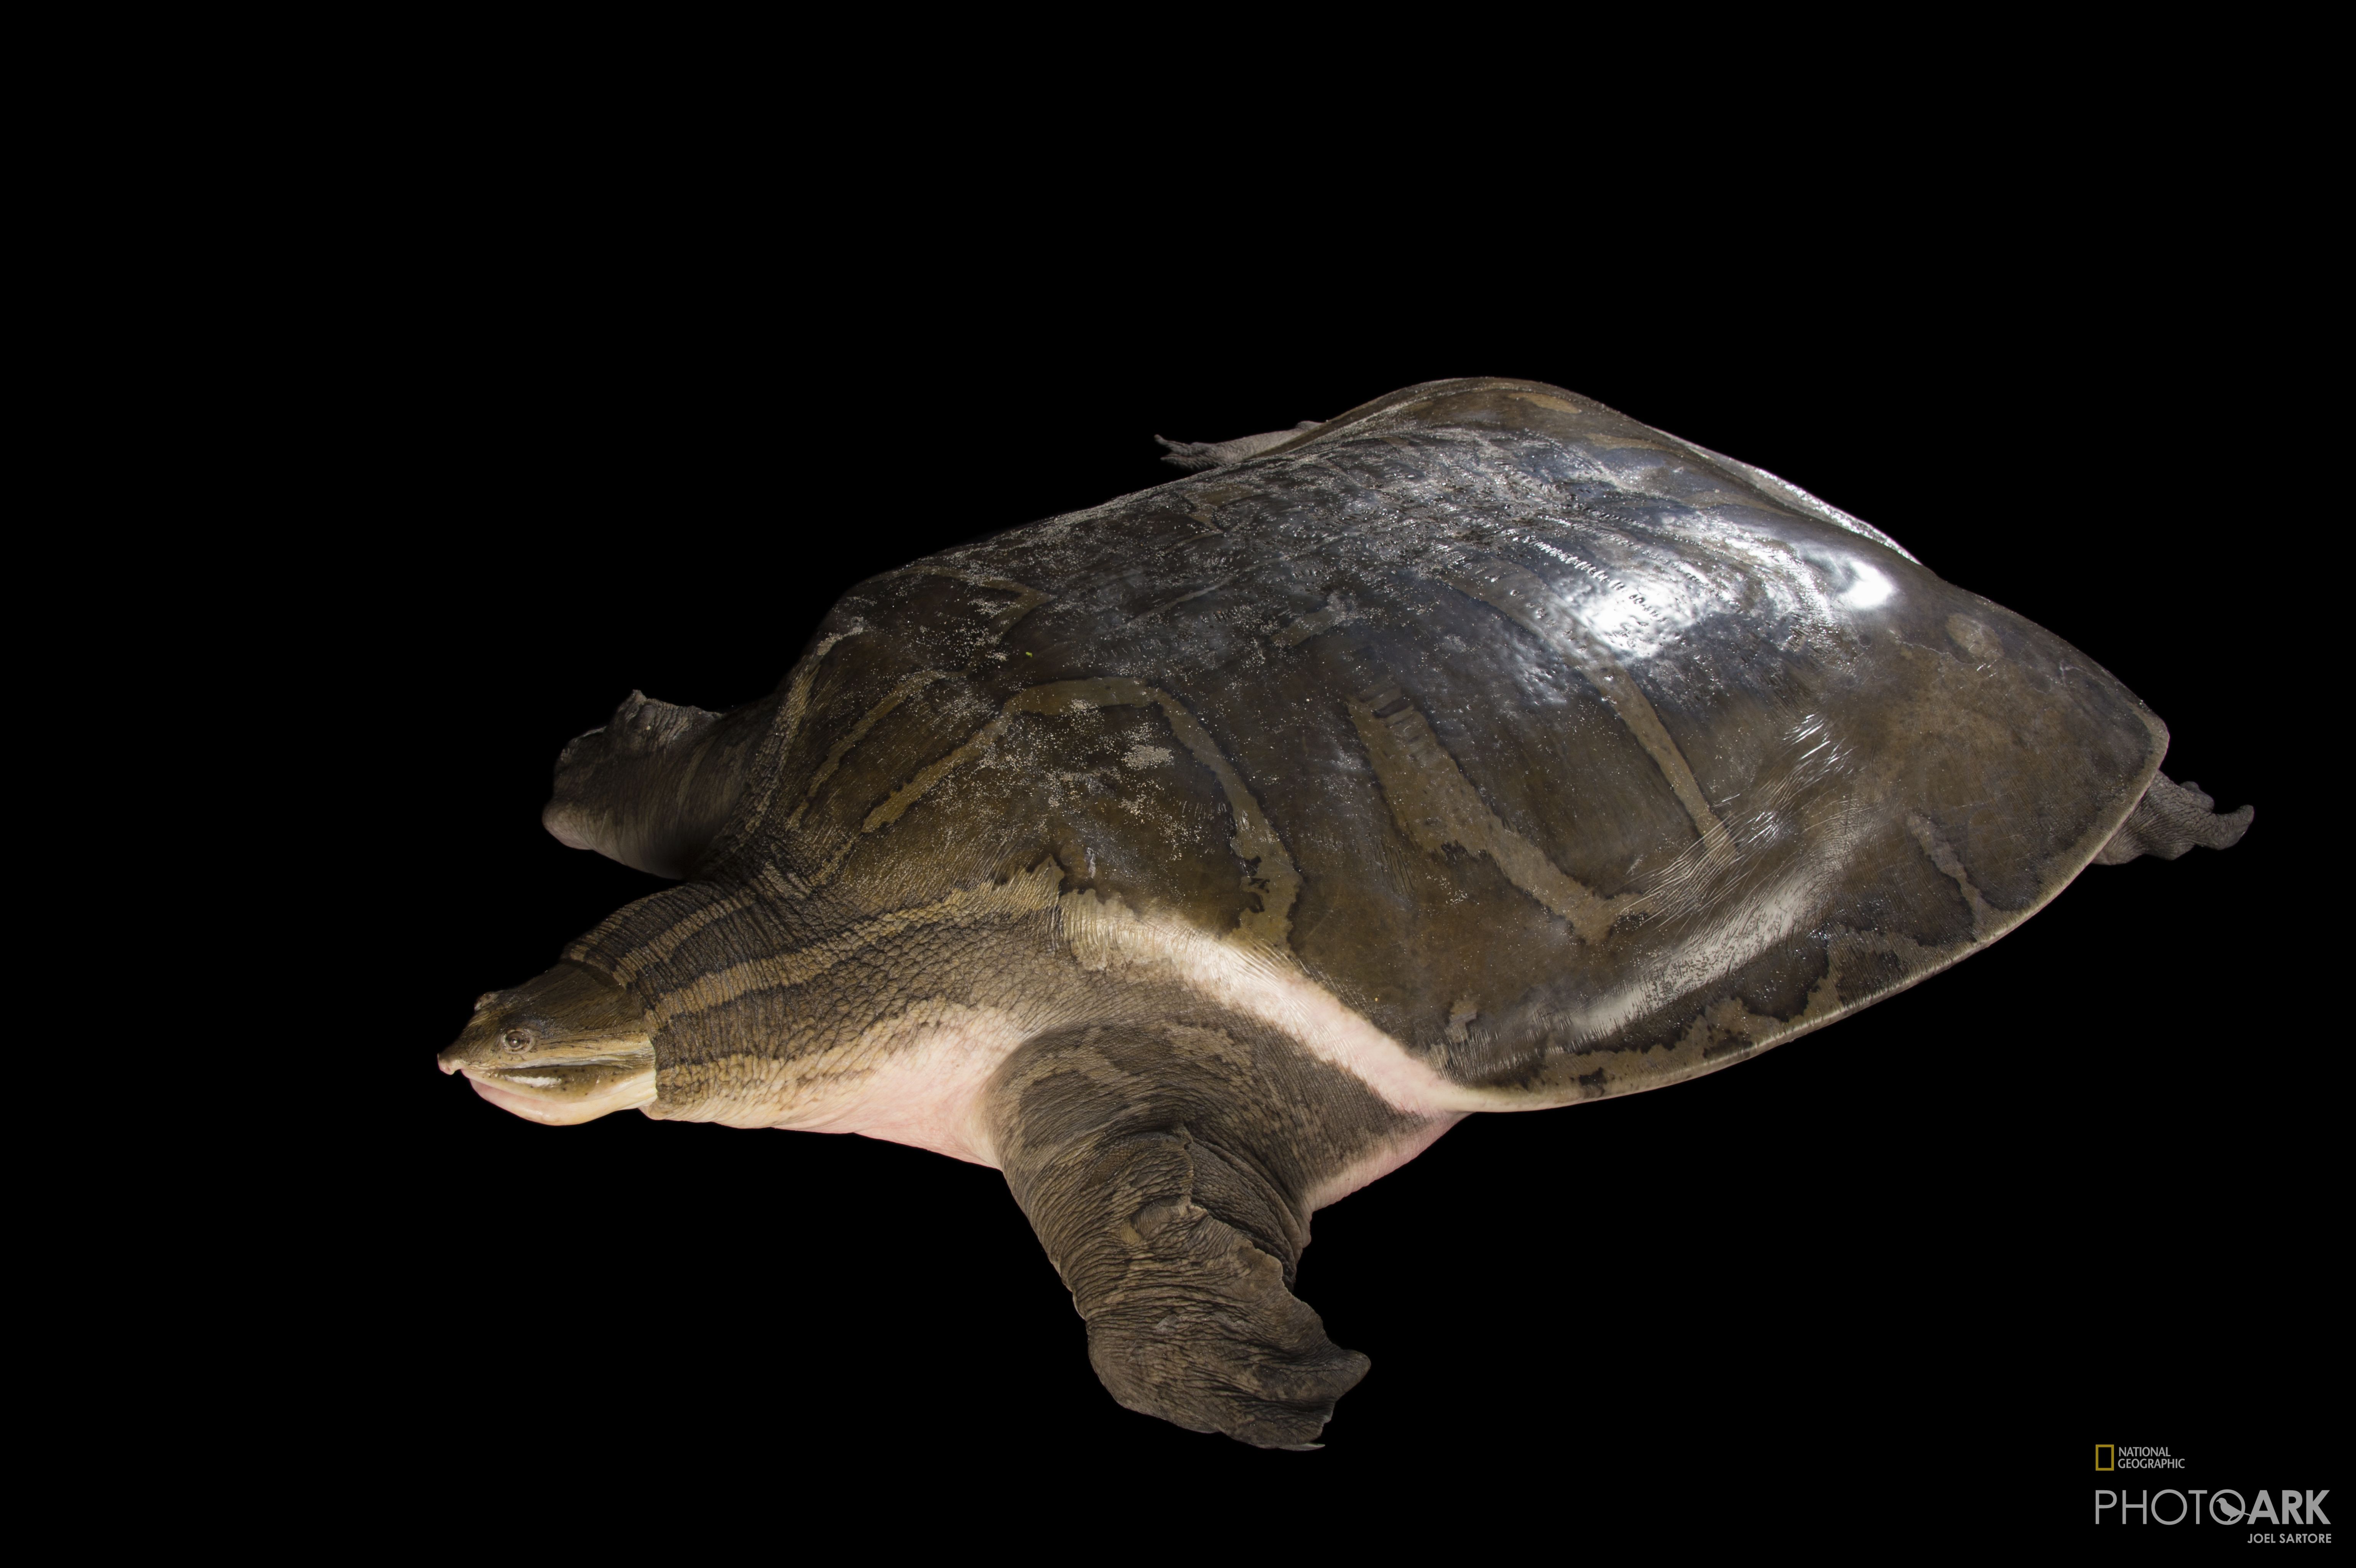 Photo Ark Home Narrow Headed Softshell Turtle National Geographic Society 